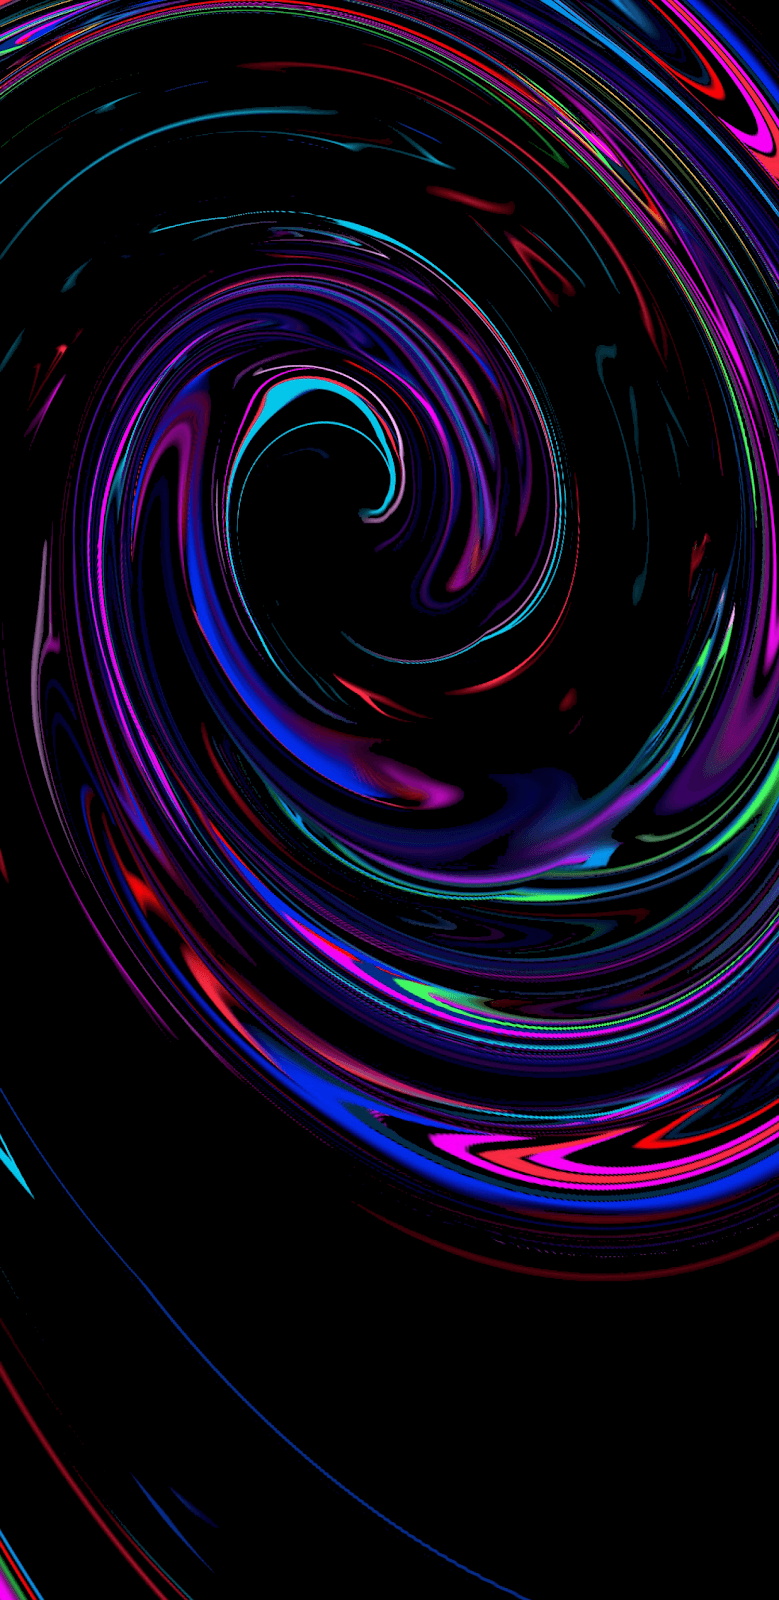 Infinity (for Amoled display). Dark background wallpaper